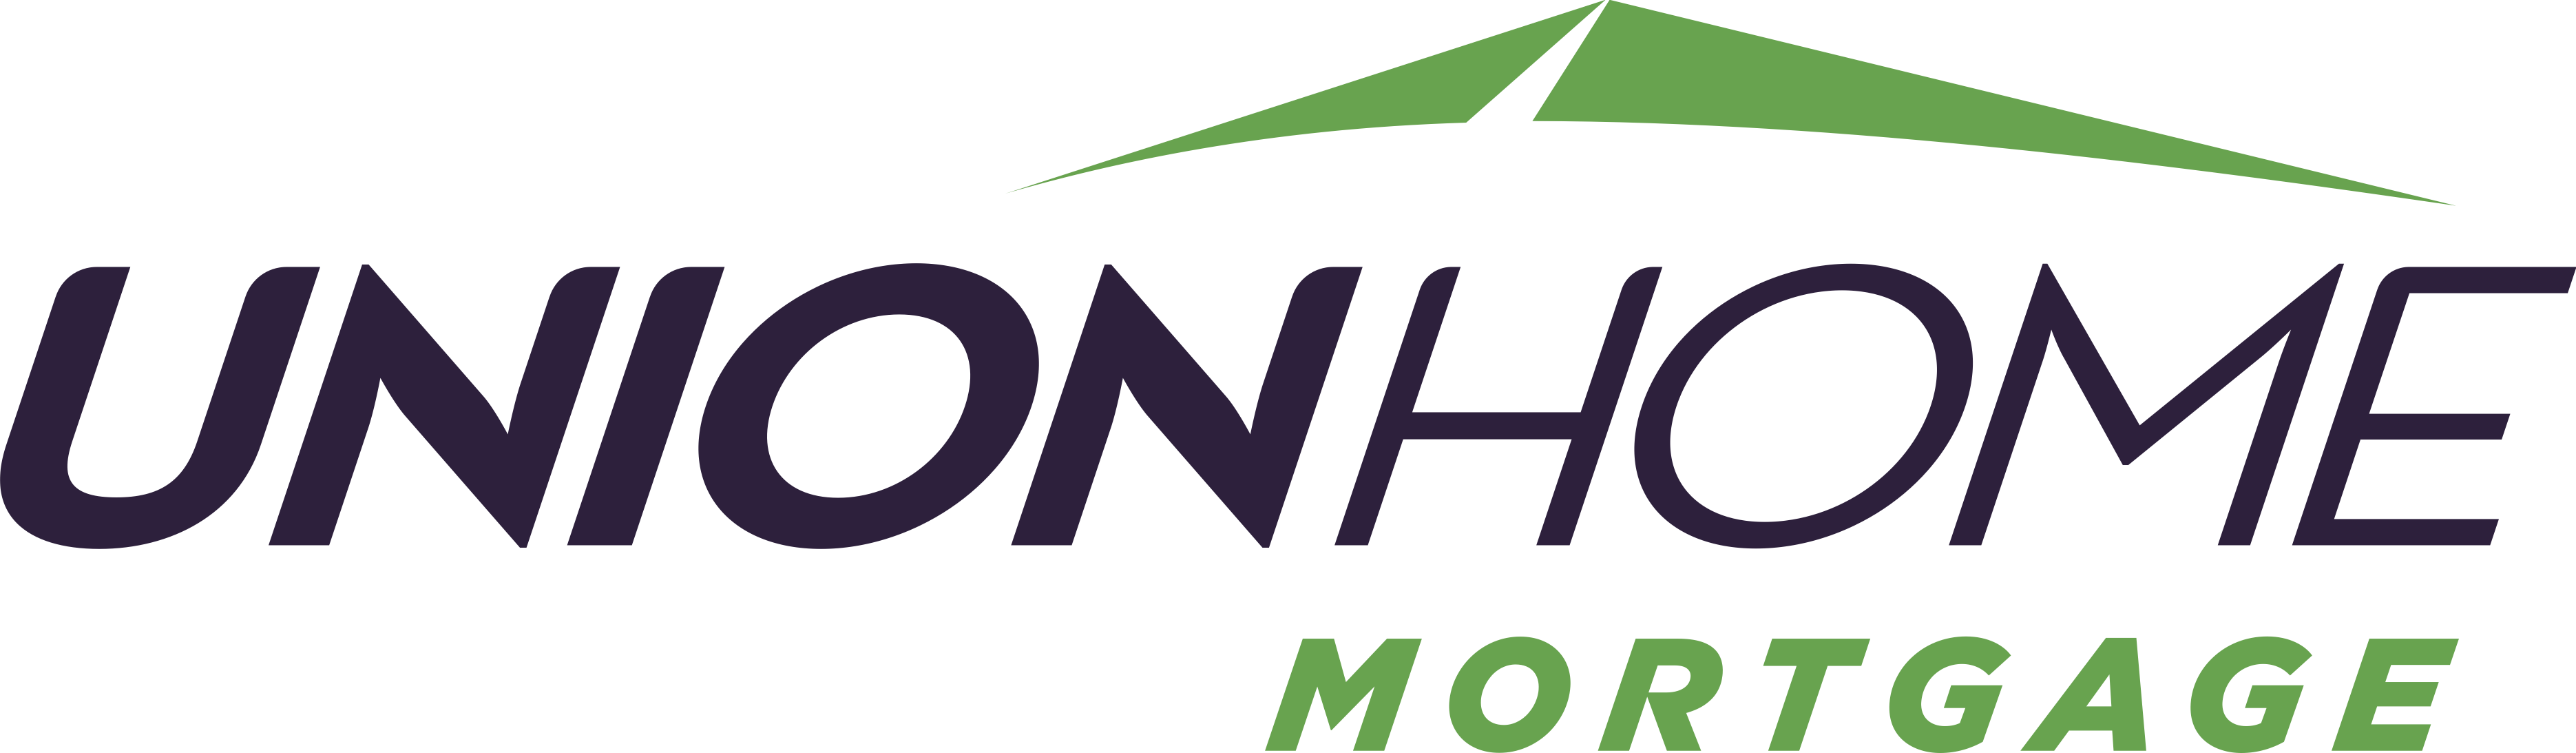 Union Home Mortgage Corp. logo